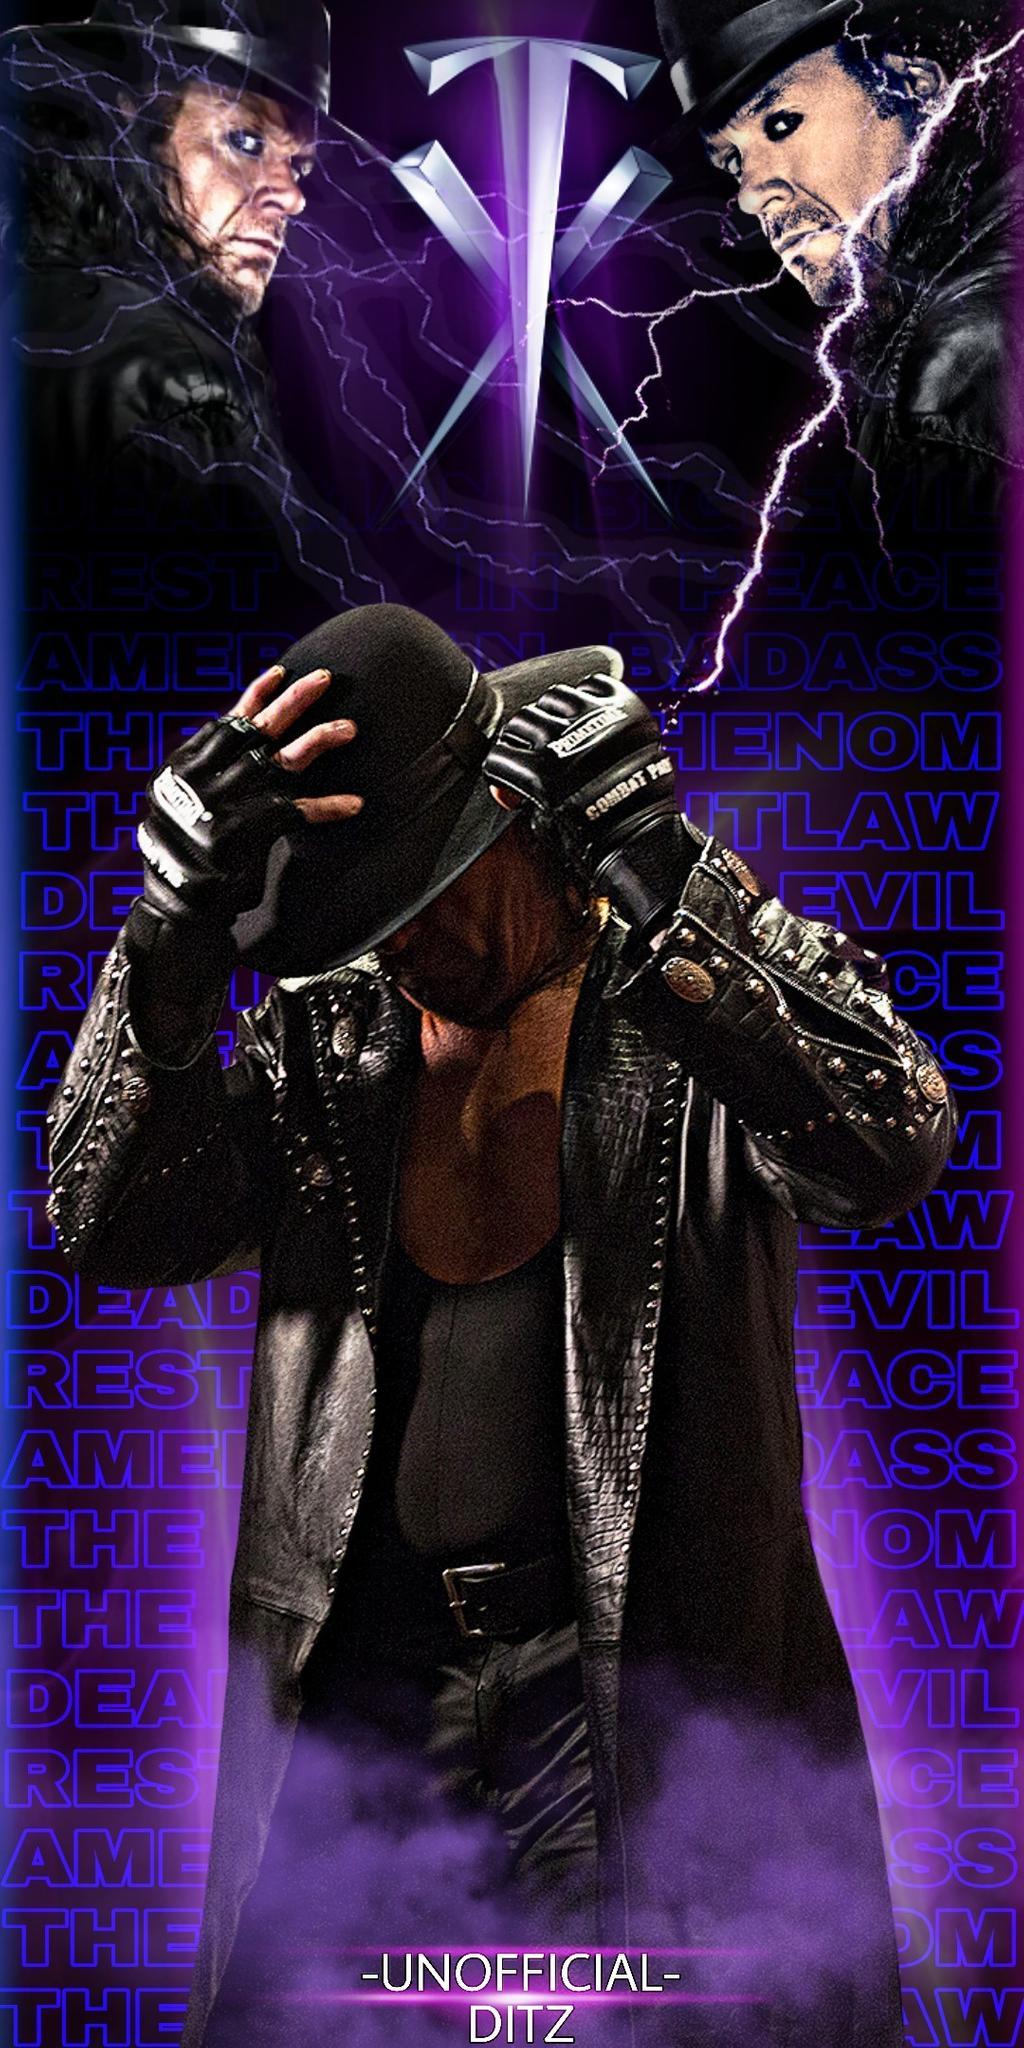 Kupy Wrestling Wallpapers - NEW The Undertaker WrestleMania 36 wallpaper!  4K, Retina, Mobile, iPad, 16:10 & 16:9 resolutions:  http://www.kupywrestlingwallpapers.info/2020/04/05/new-the-undertaker -wrestlemania-36-wallpaper/ #wwe #wrestlemania ...